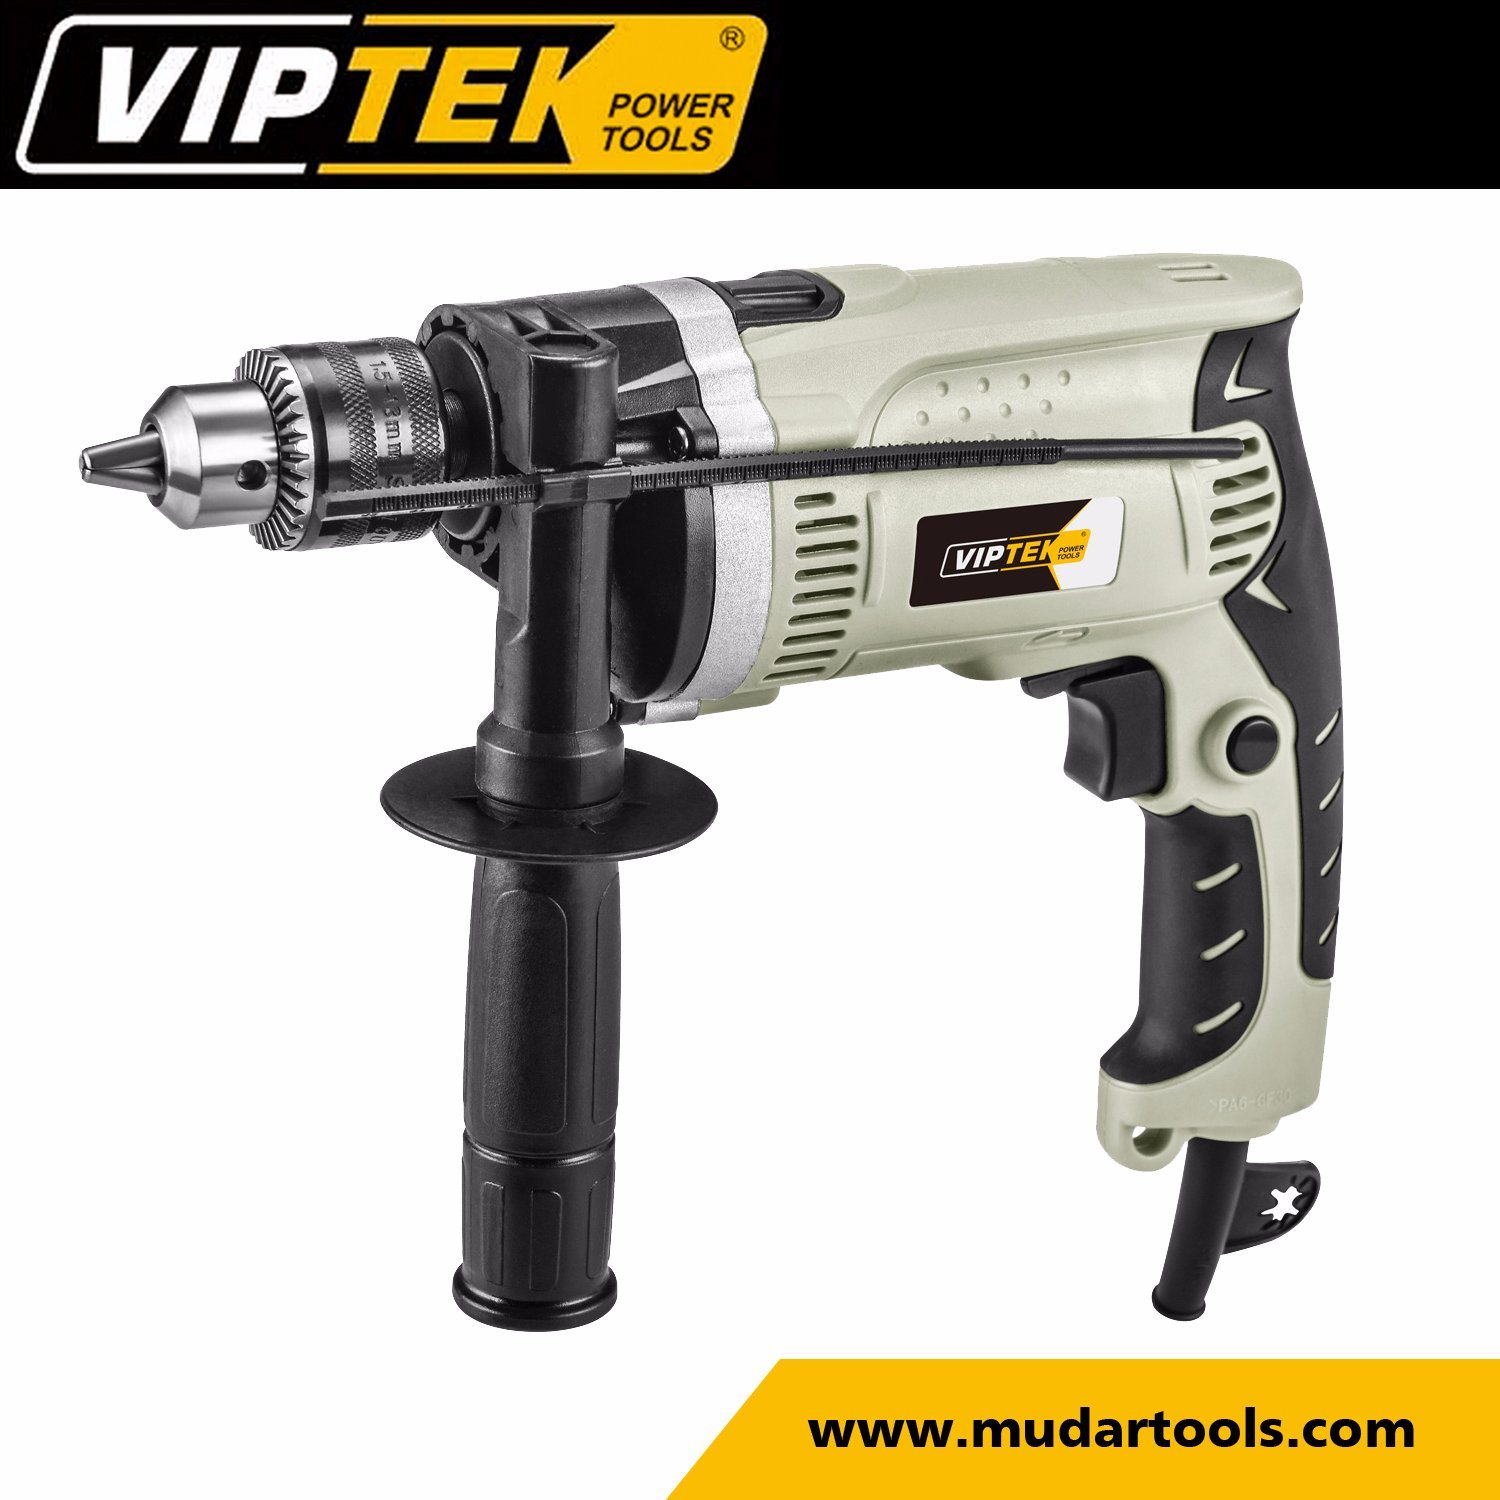 Viptek Power Tools 13mm 600W Electric Impact Drill